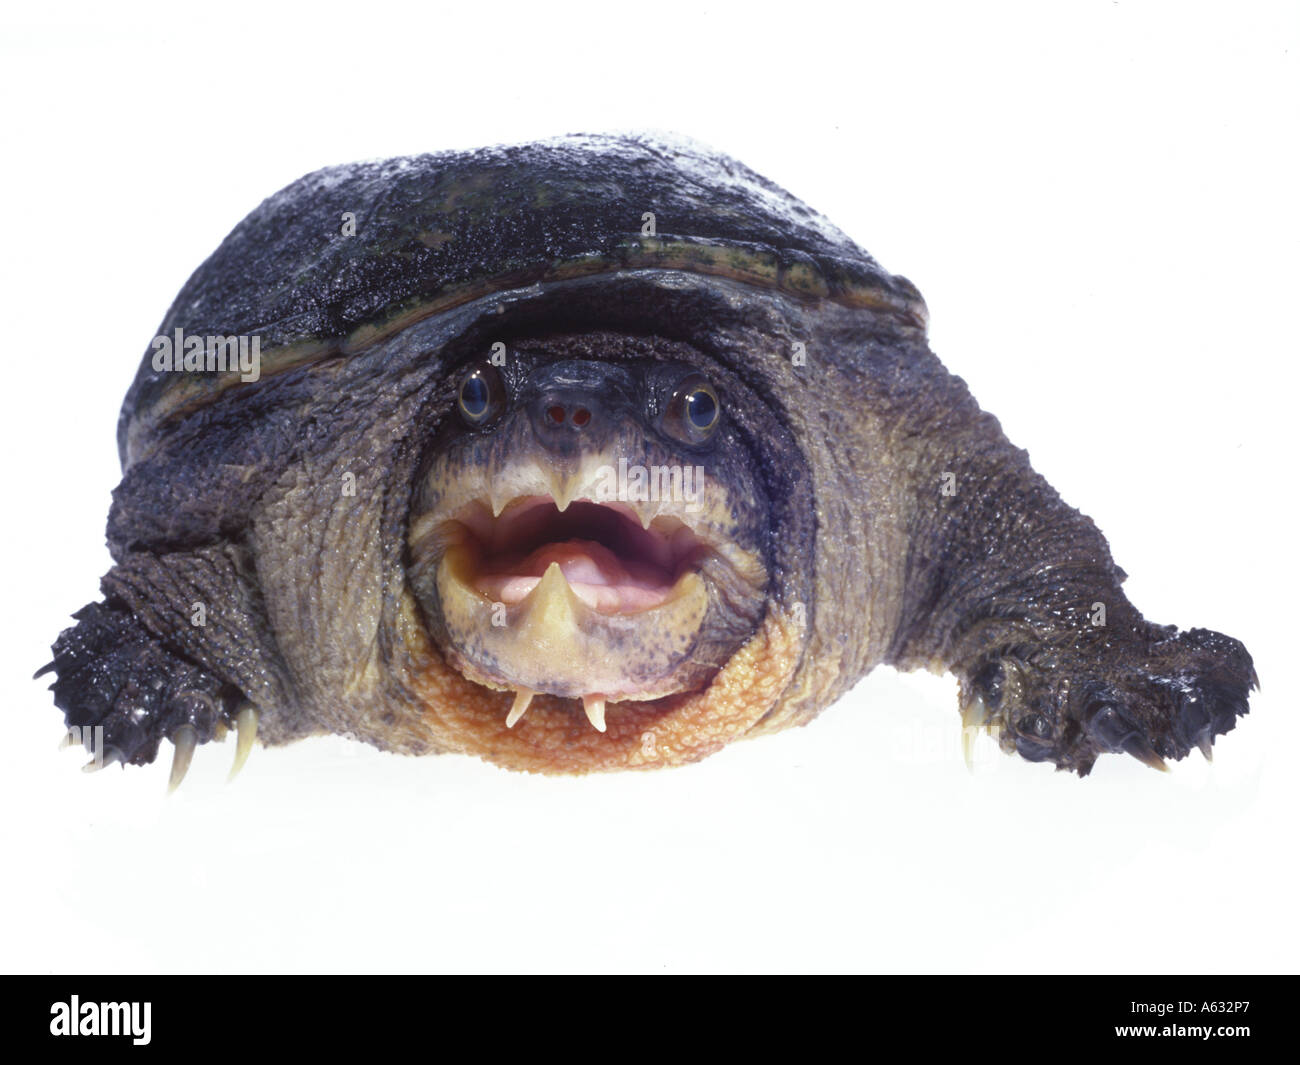 Close-up of Narrow-bridged Musk Turtle (Claudius angustatus) on white background Stock Photo